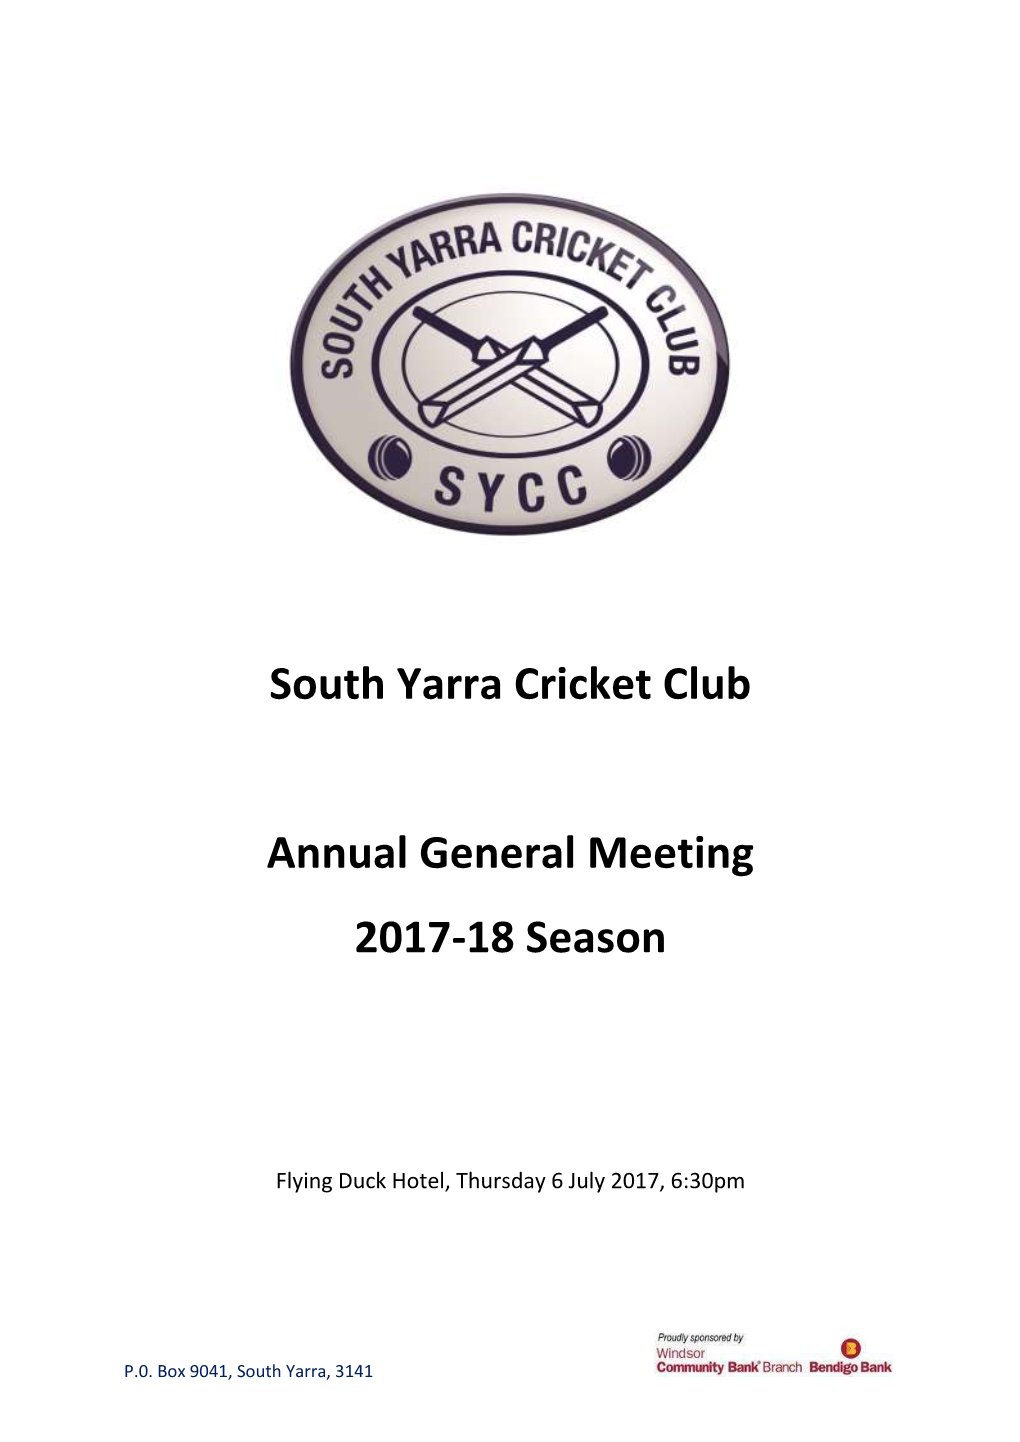 South Yarra Cricket Club Annual General Meeting 2017-18 Season